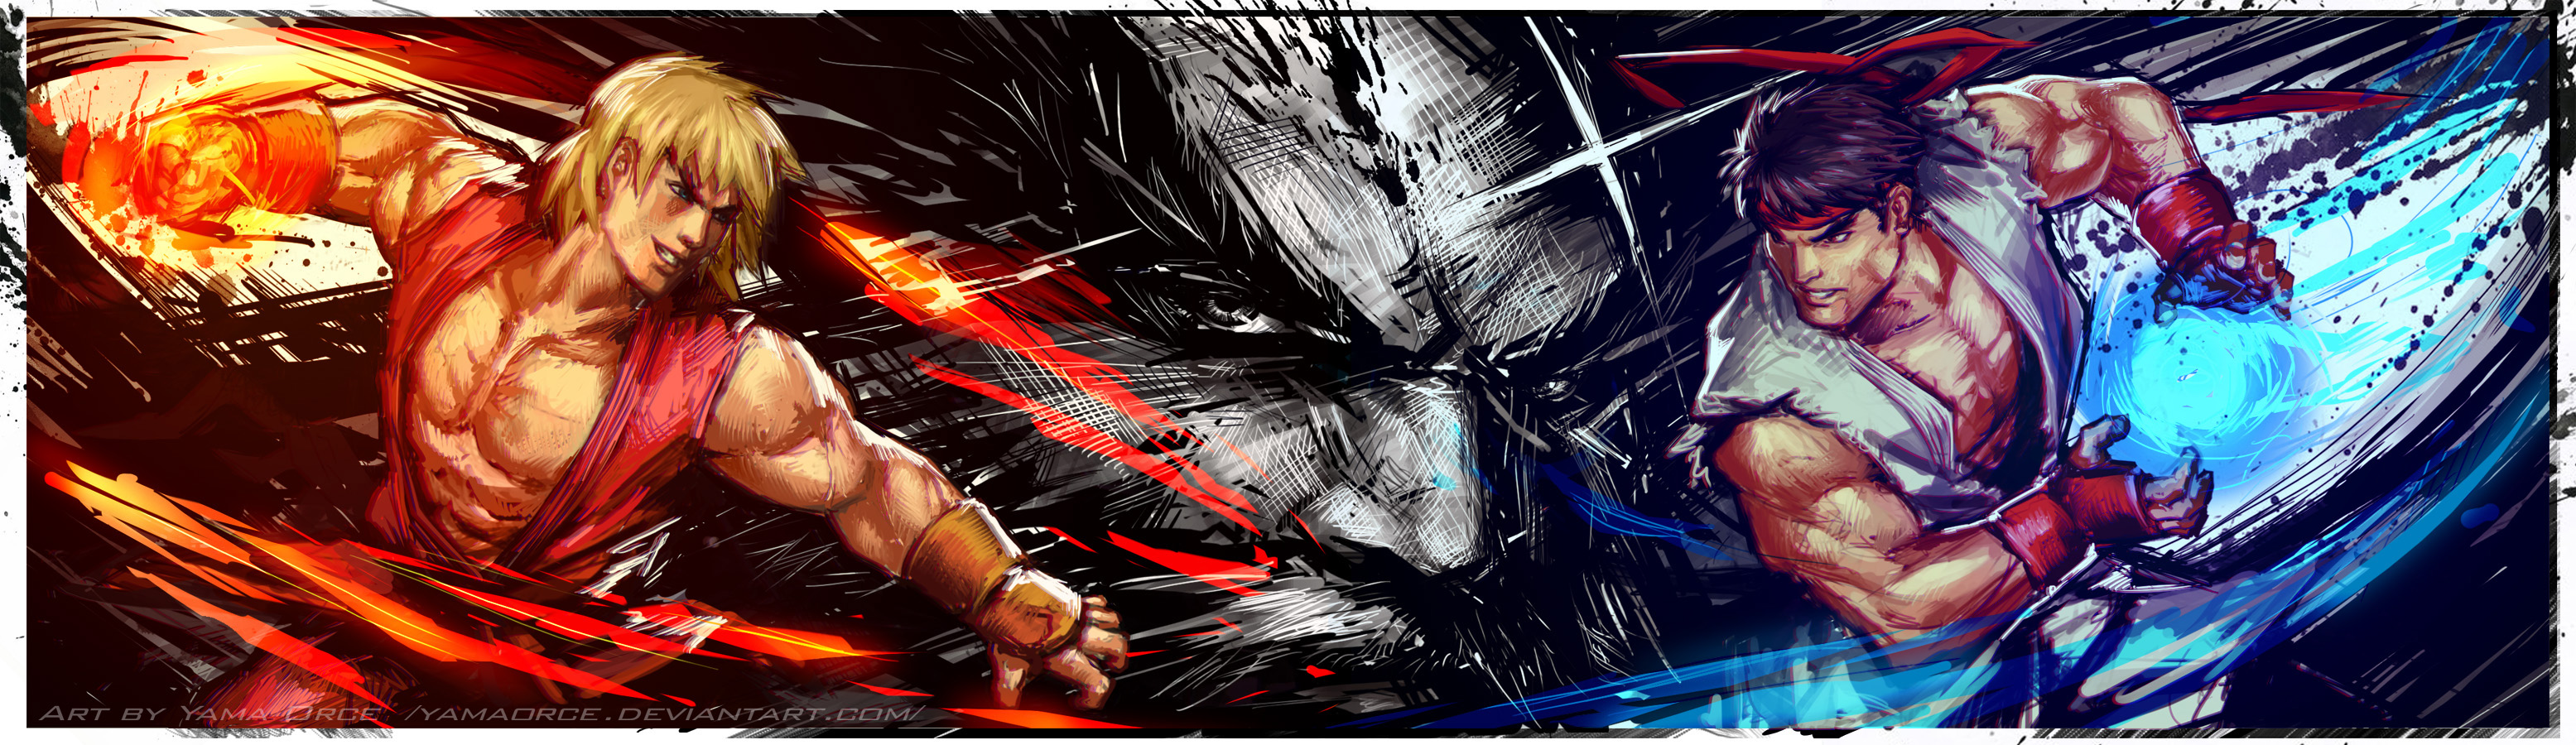 Super Street Fighter IV Character Wallpaper | Chun-Li | Super street fighter,  Street fighter characters, Street fighter